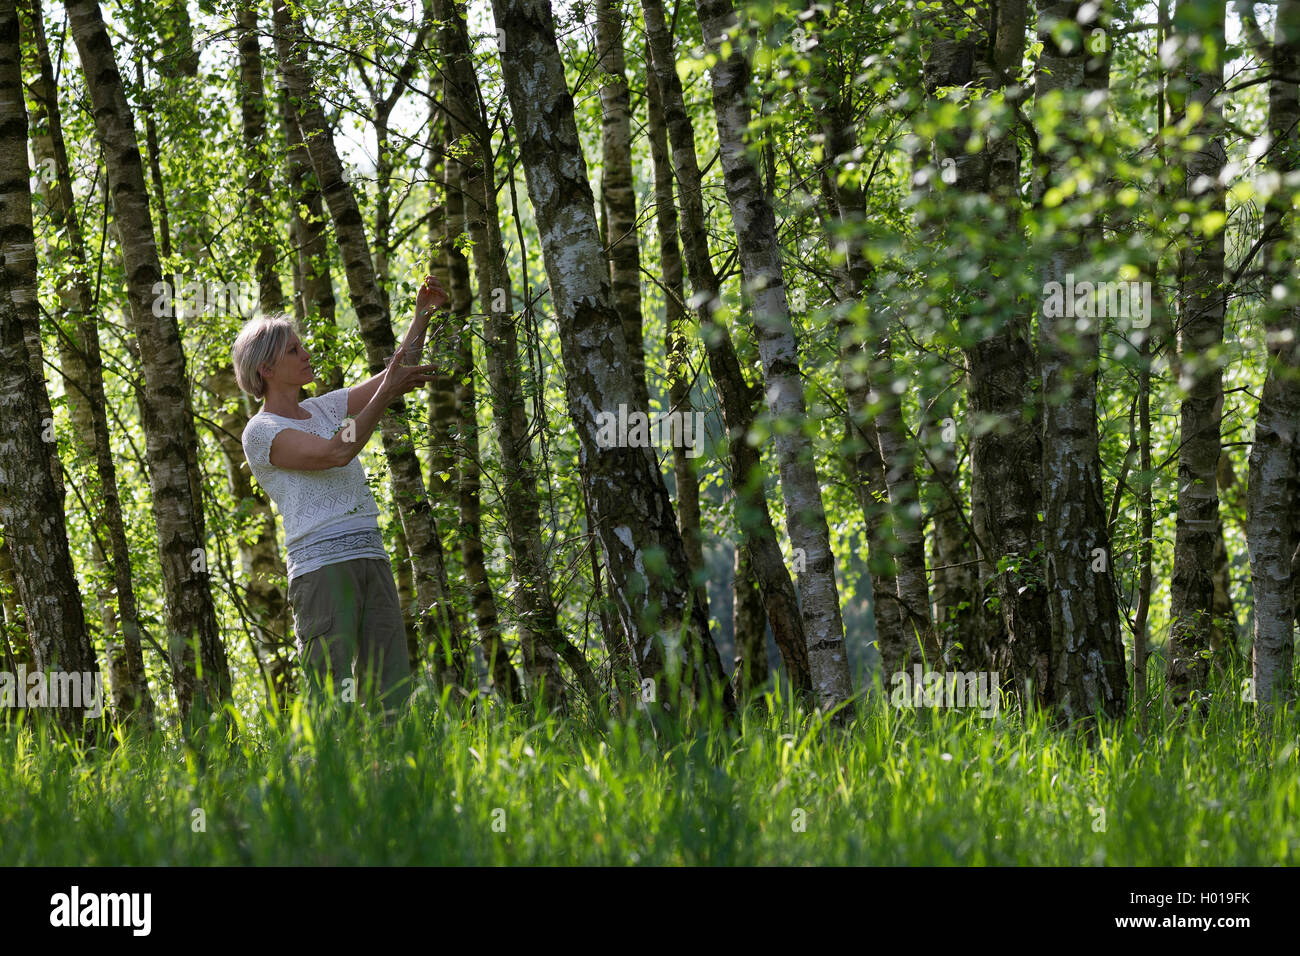 common birch, silver birch, European white birch, white birch (Betula pendula, Betula alba), woman collecting young birch leaves, Germany Stock Photo